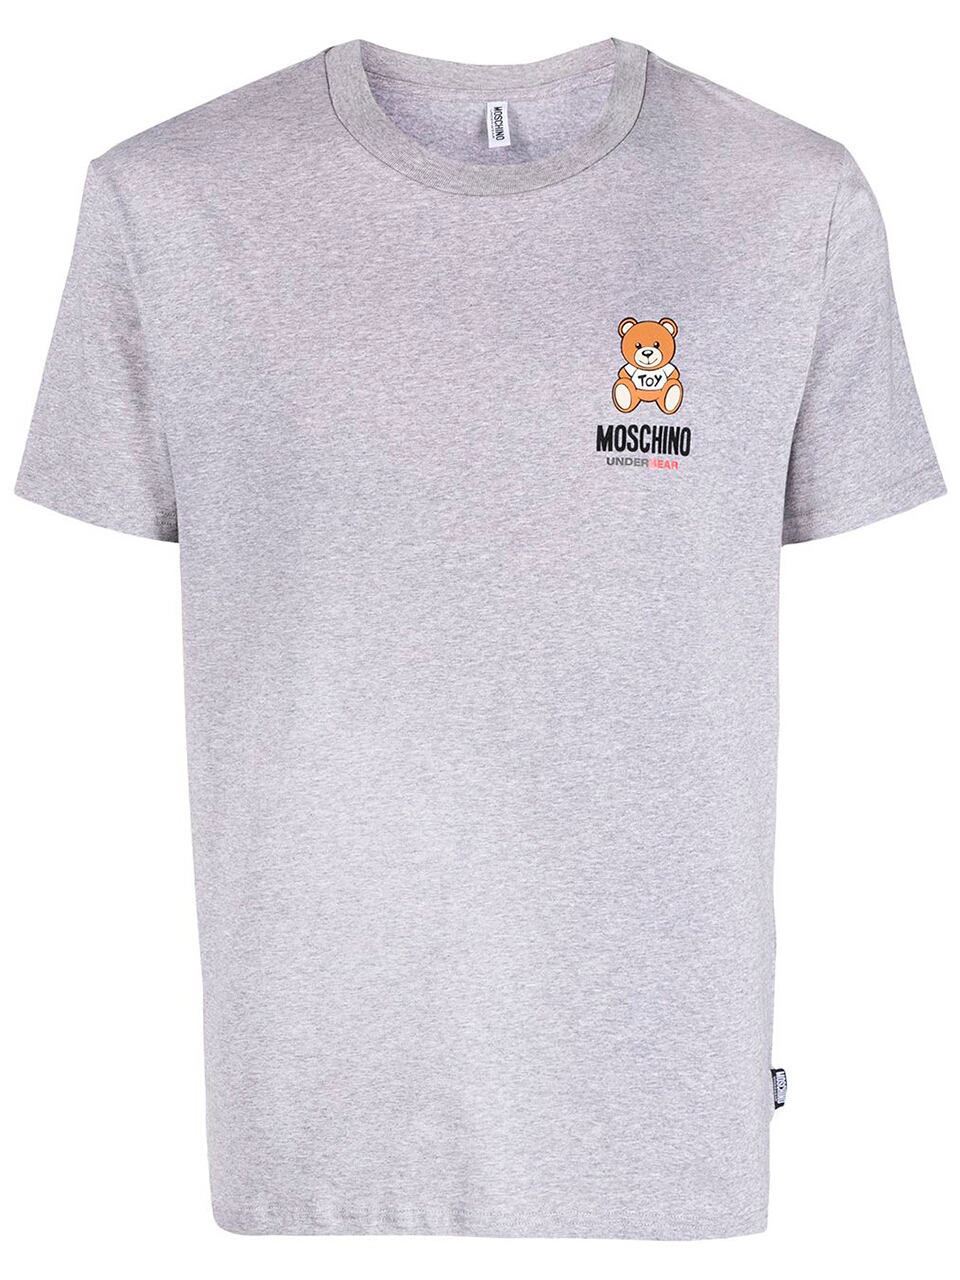 Imagem de: Camiseta Moschino Teddy Bear Cinza Estampa Pequena